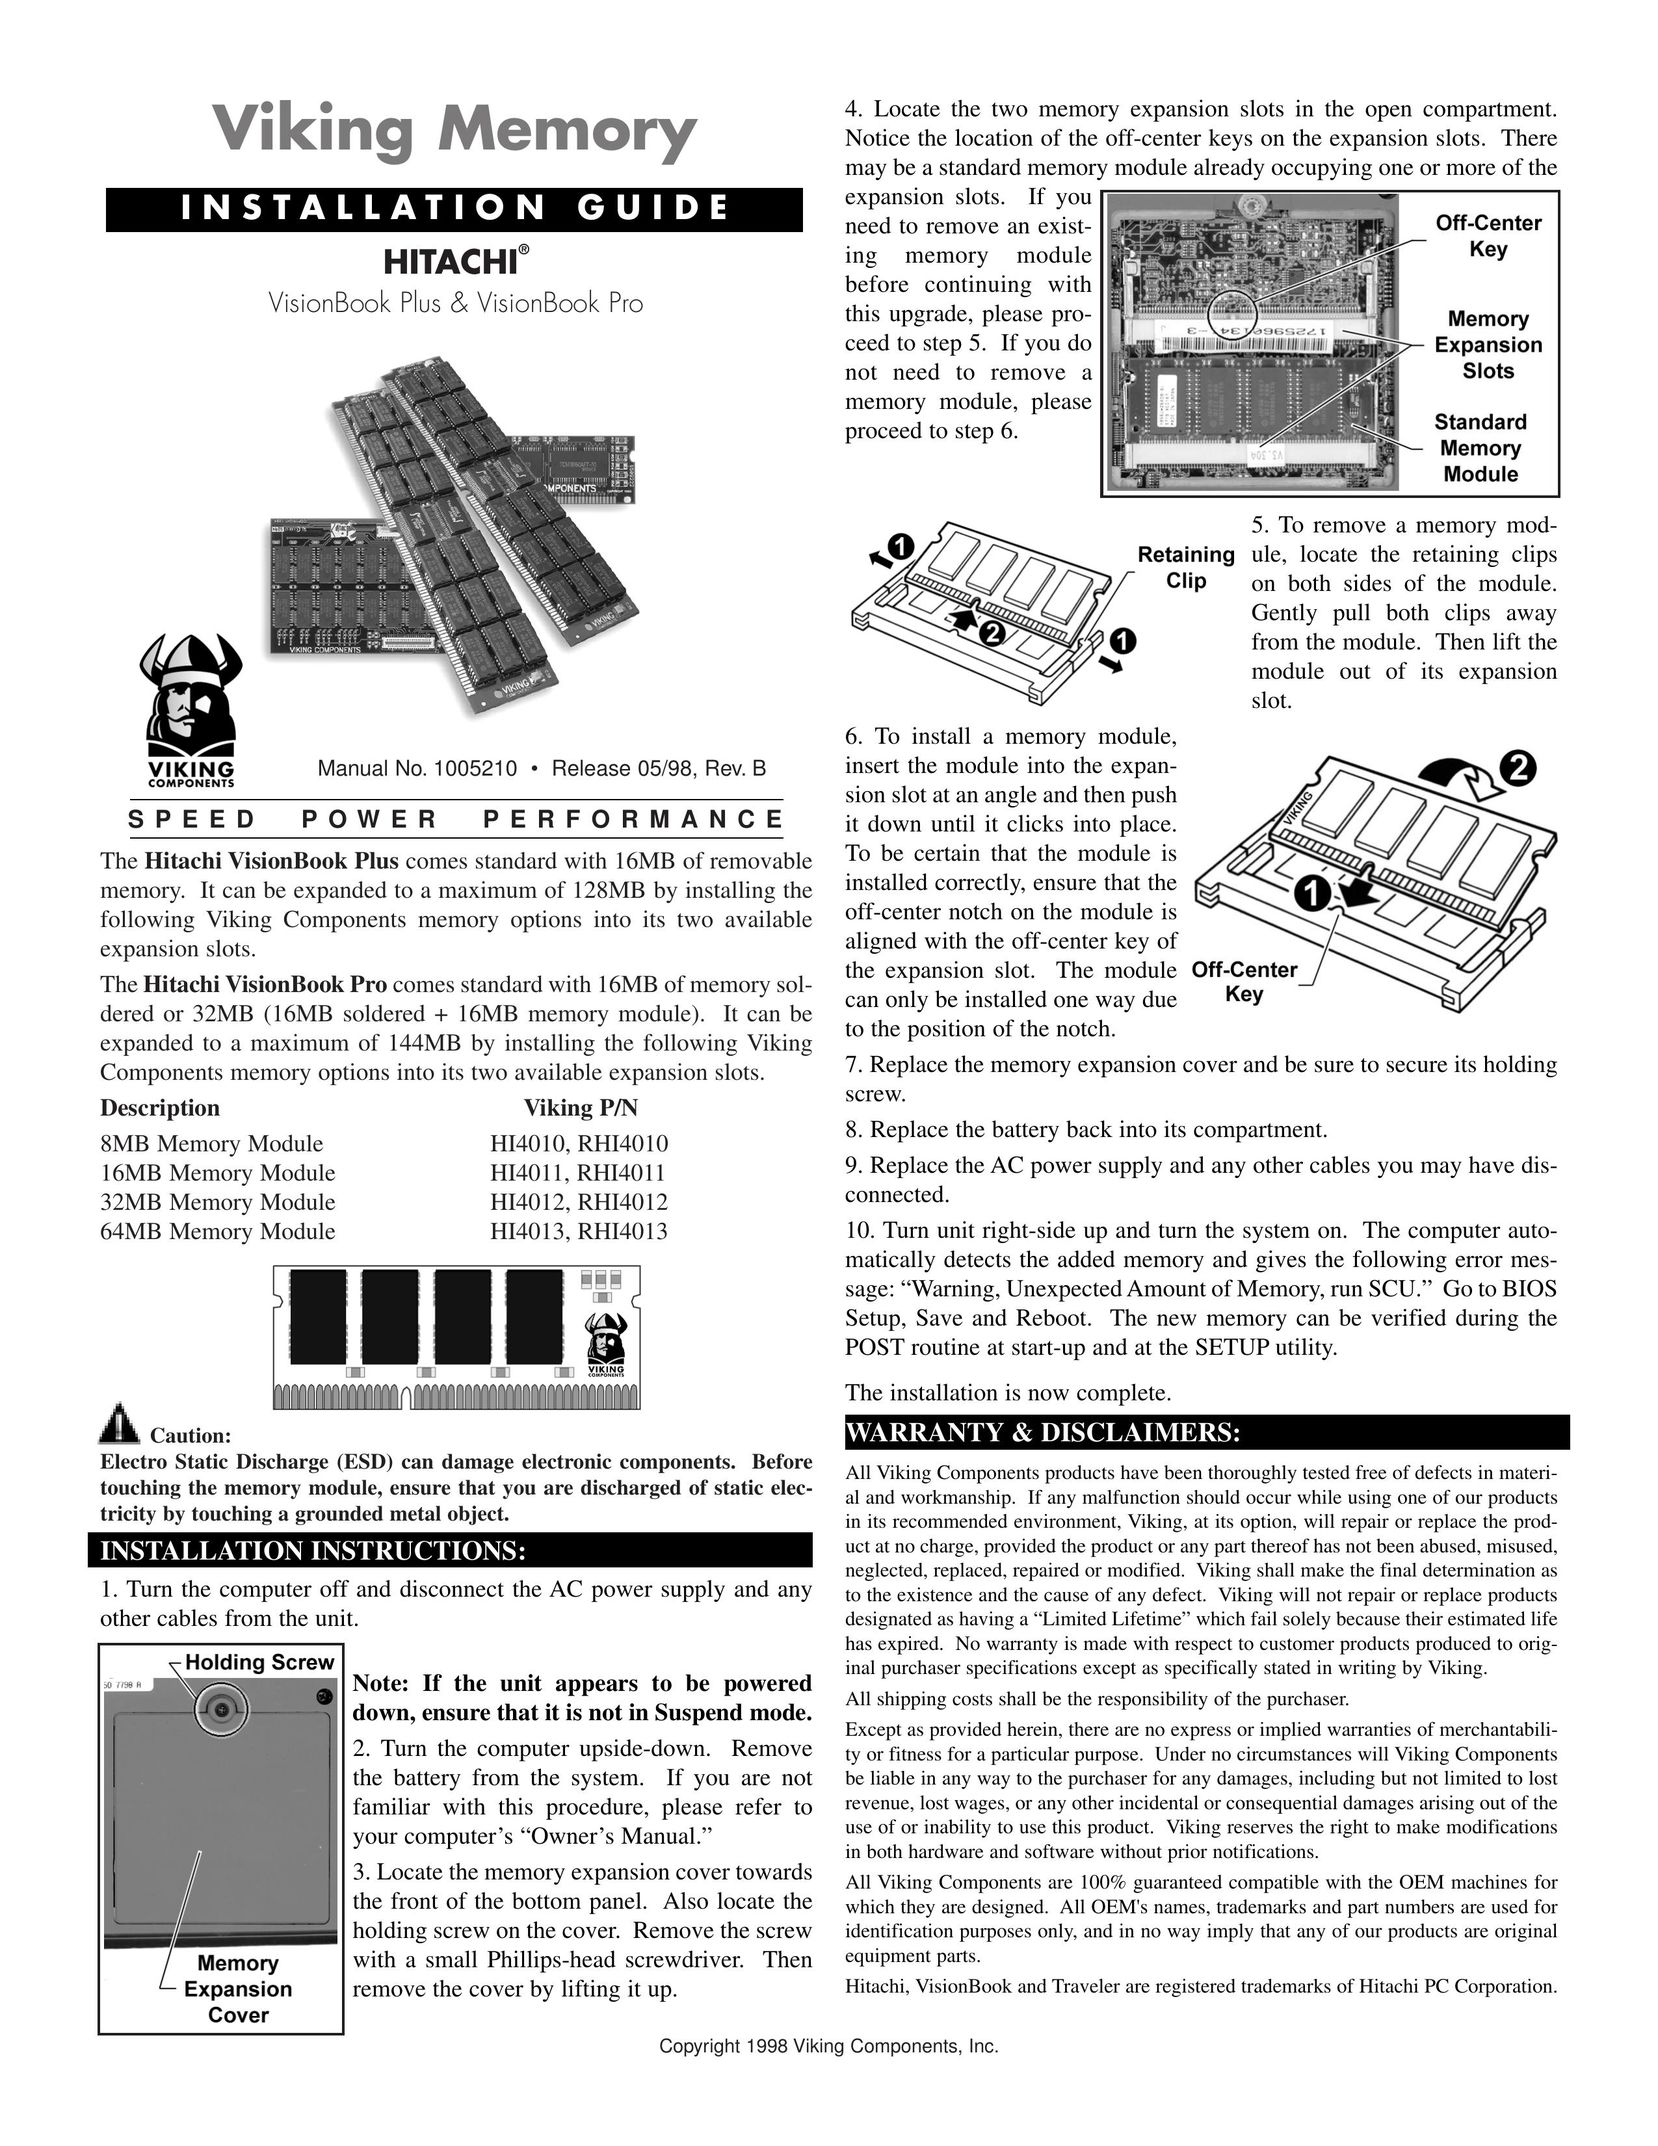 Viking RHI4011 Personal Computer User Manual